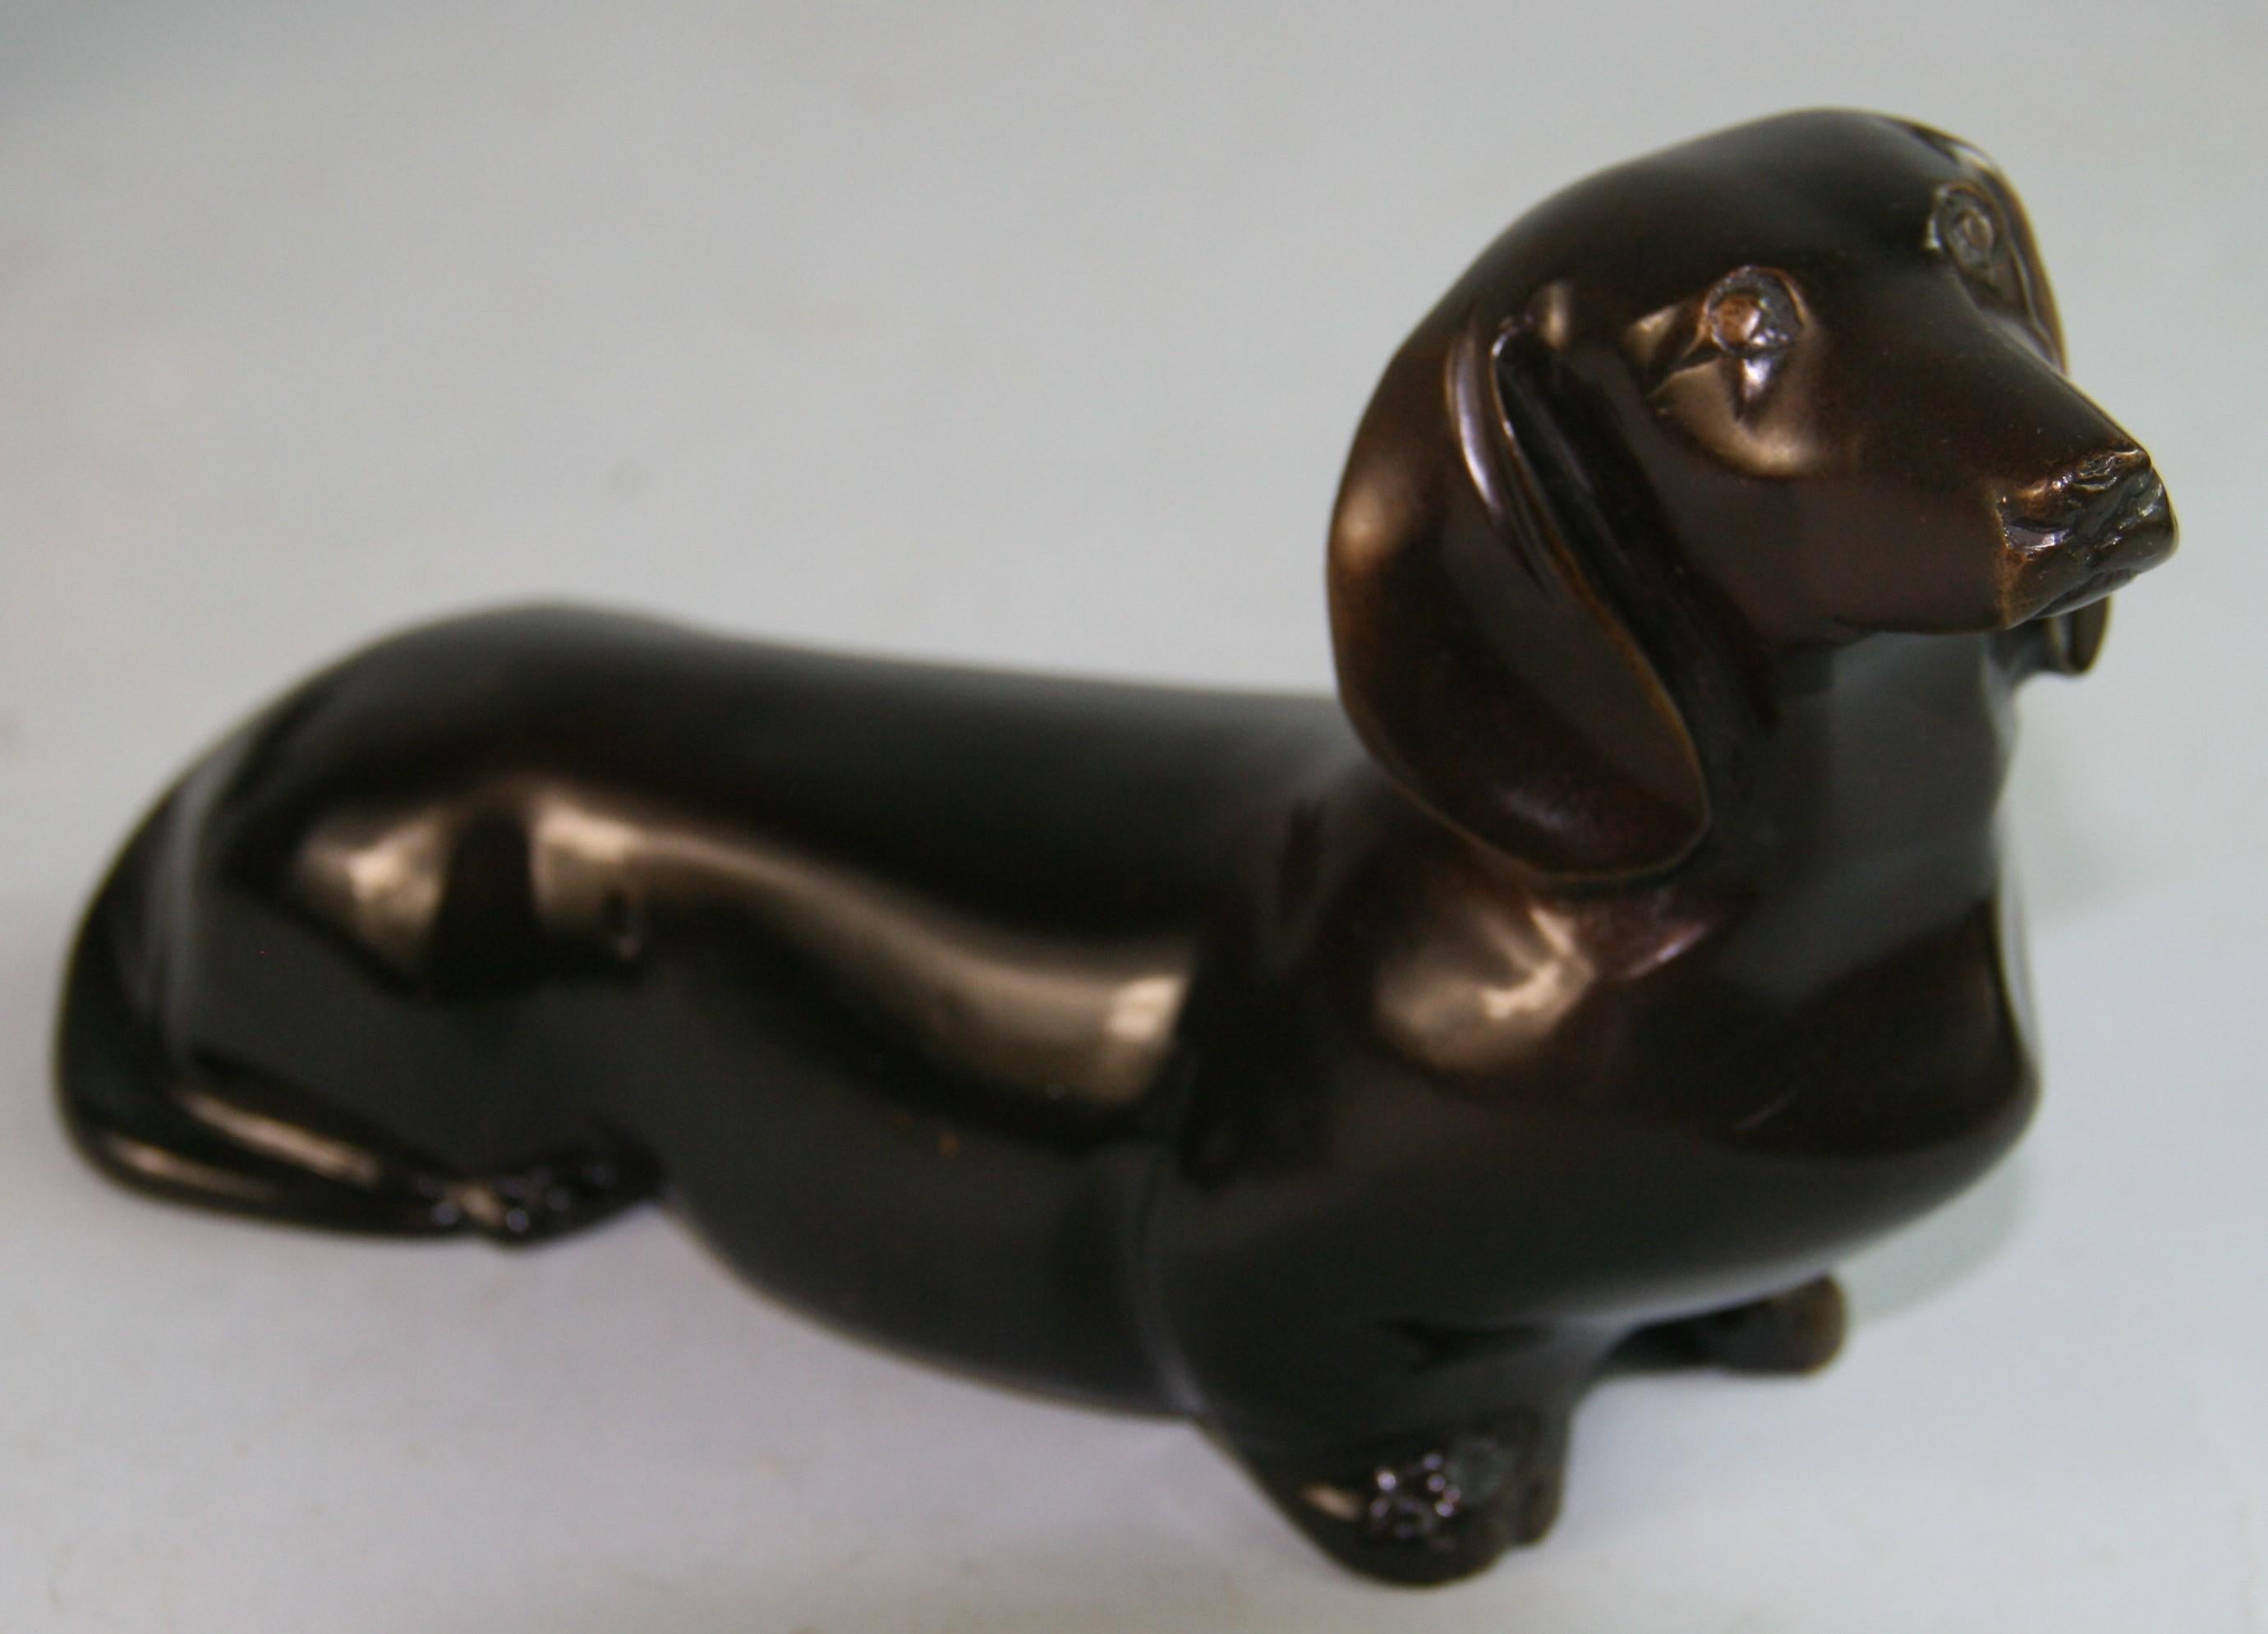 1578 Cast bronze of a dachshund dog.